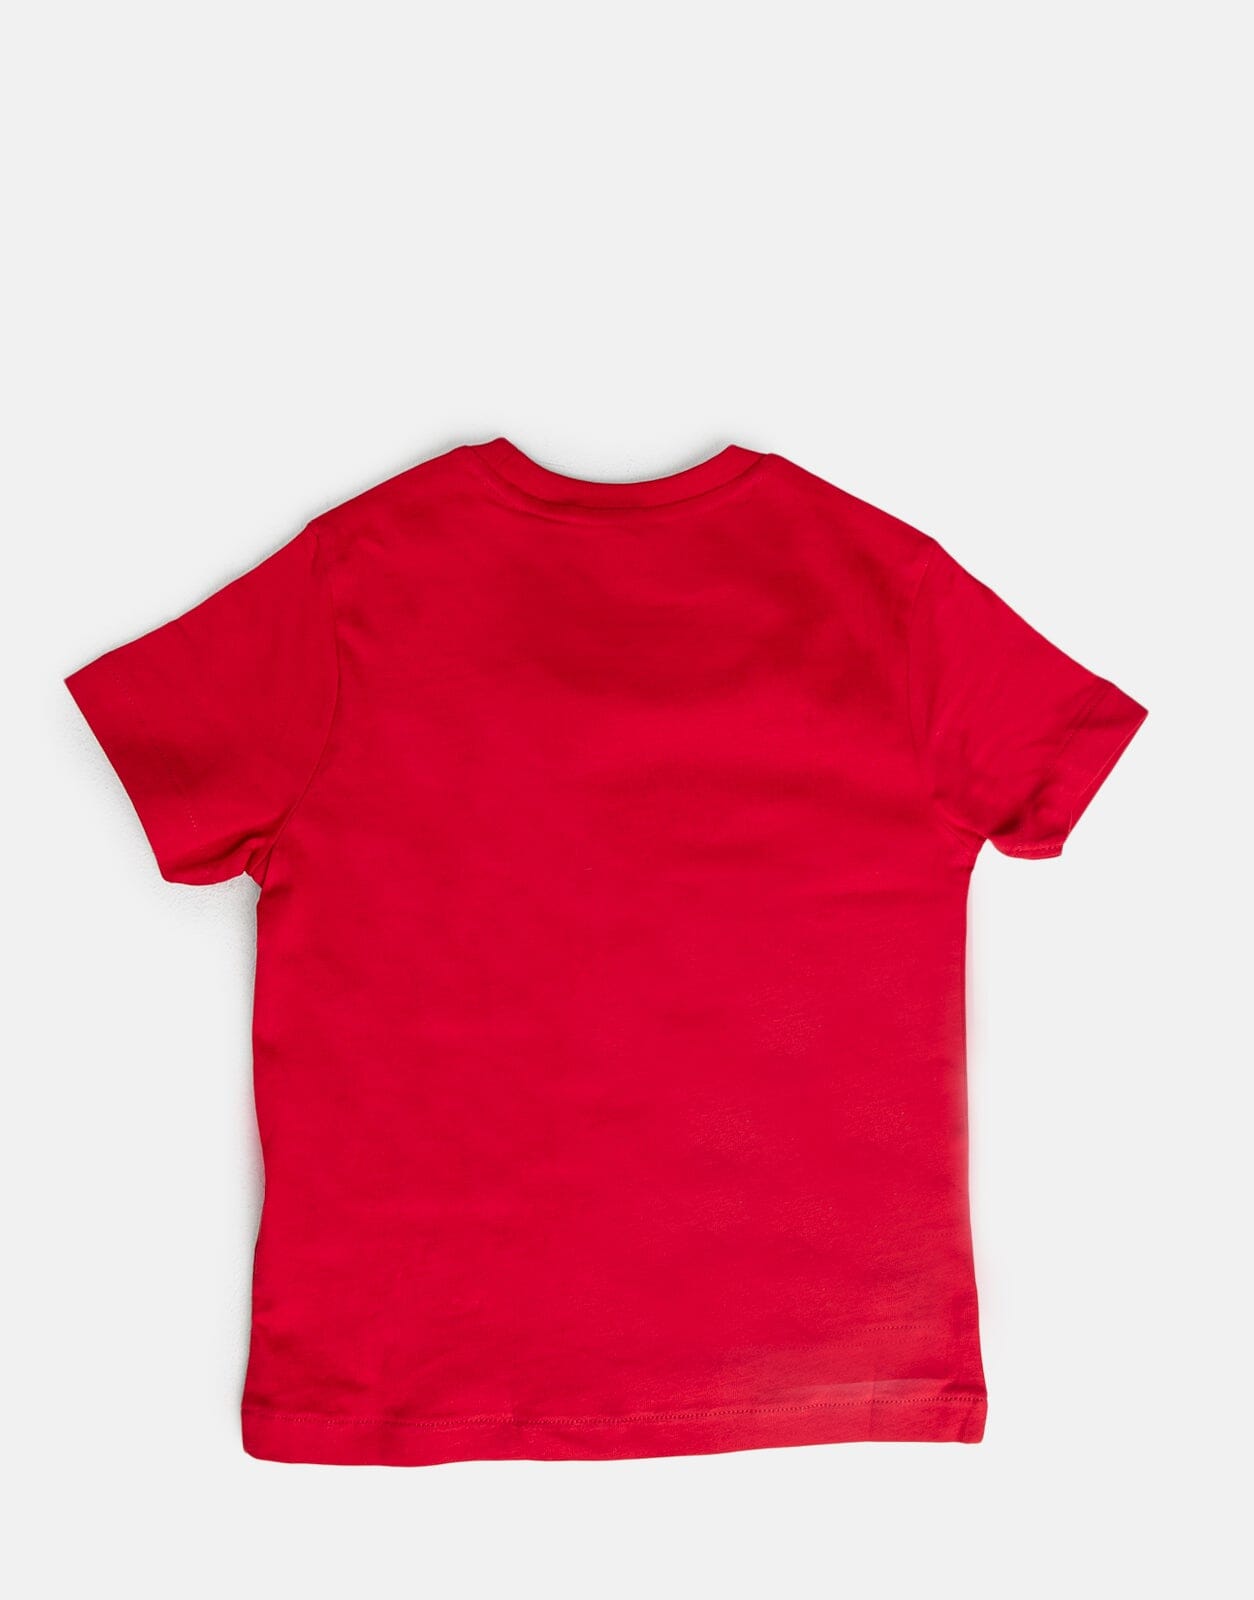 Polo Kids Rick Red T-Shirt - Subwear